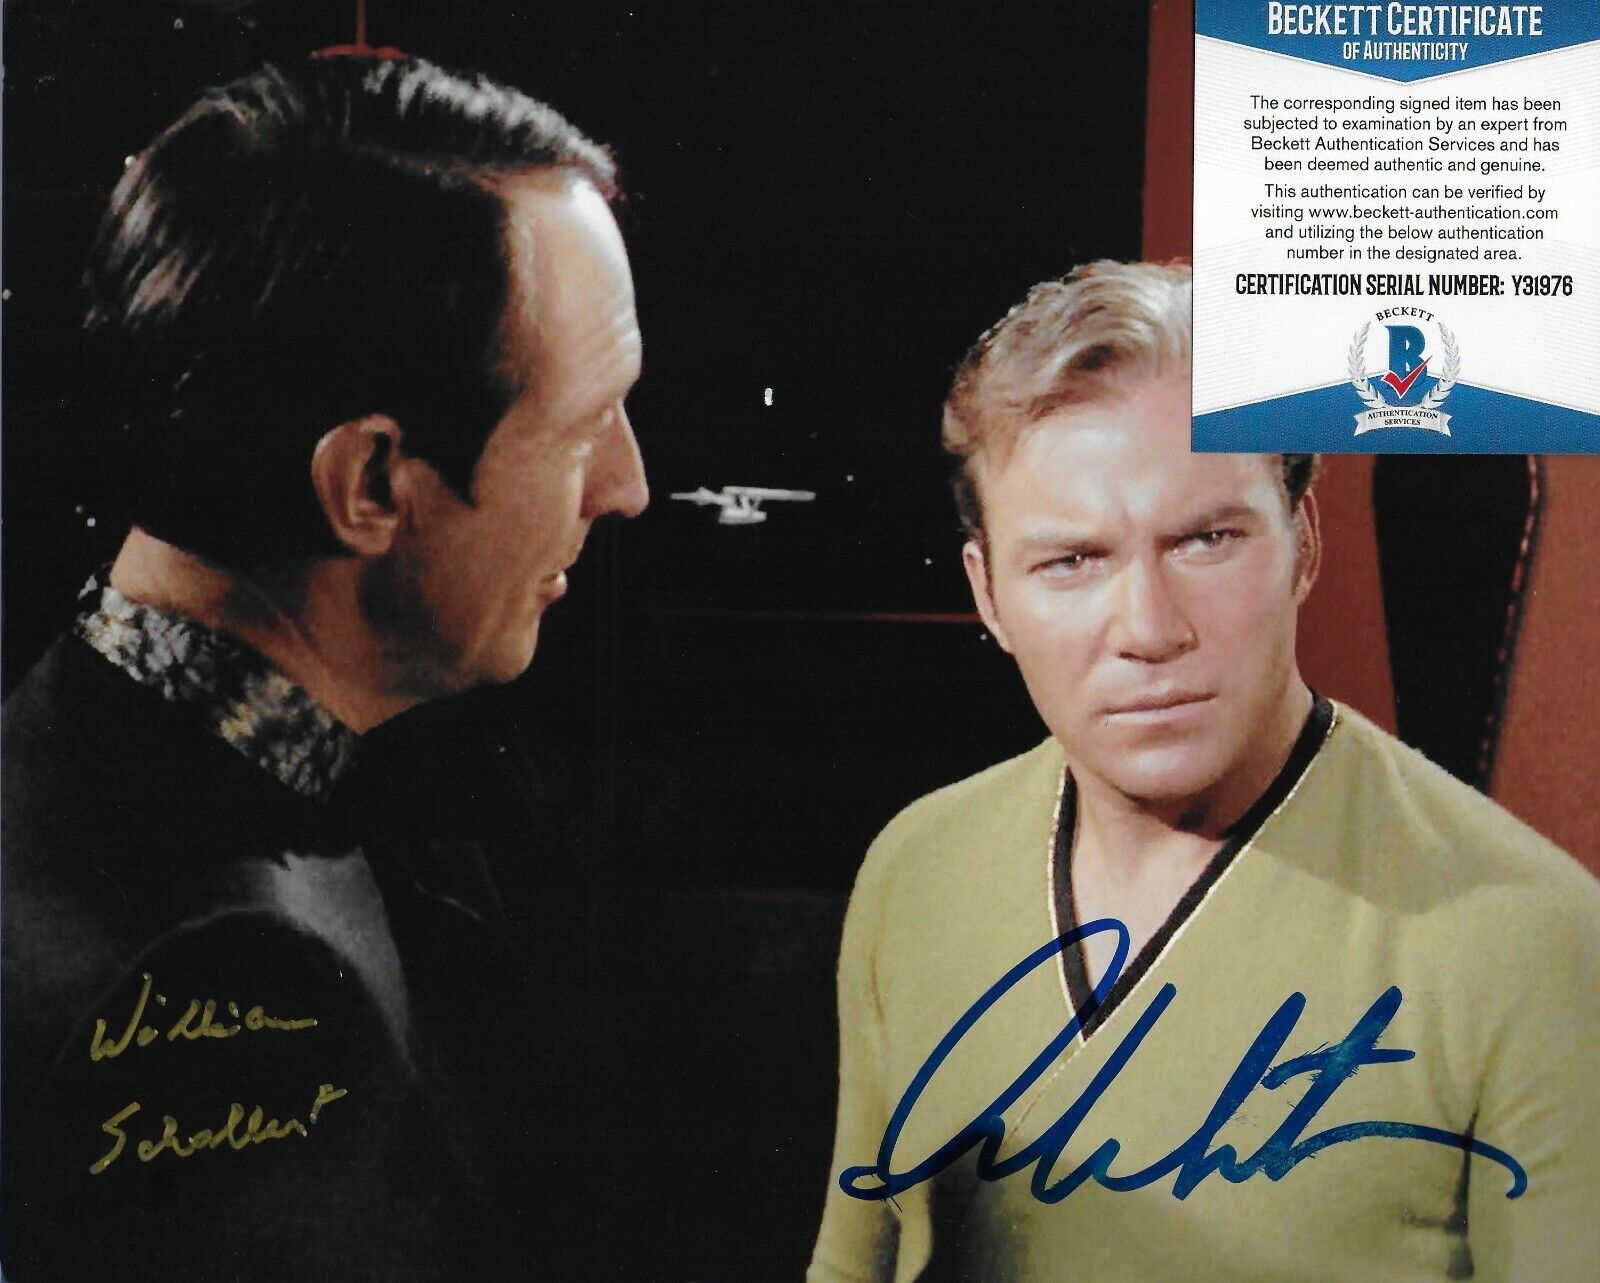 William Shatner/William Schallert Star Trek TOS Signed 8X10 Photo Poster painting w/Beckett COA